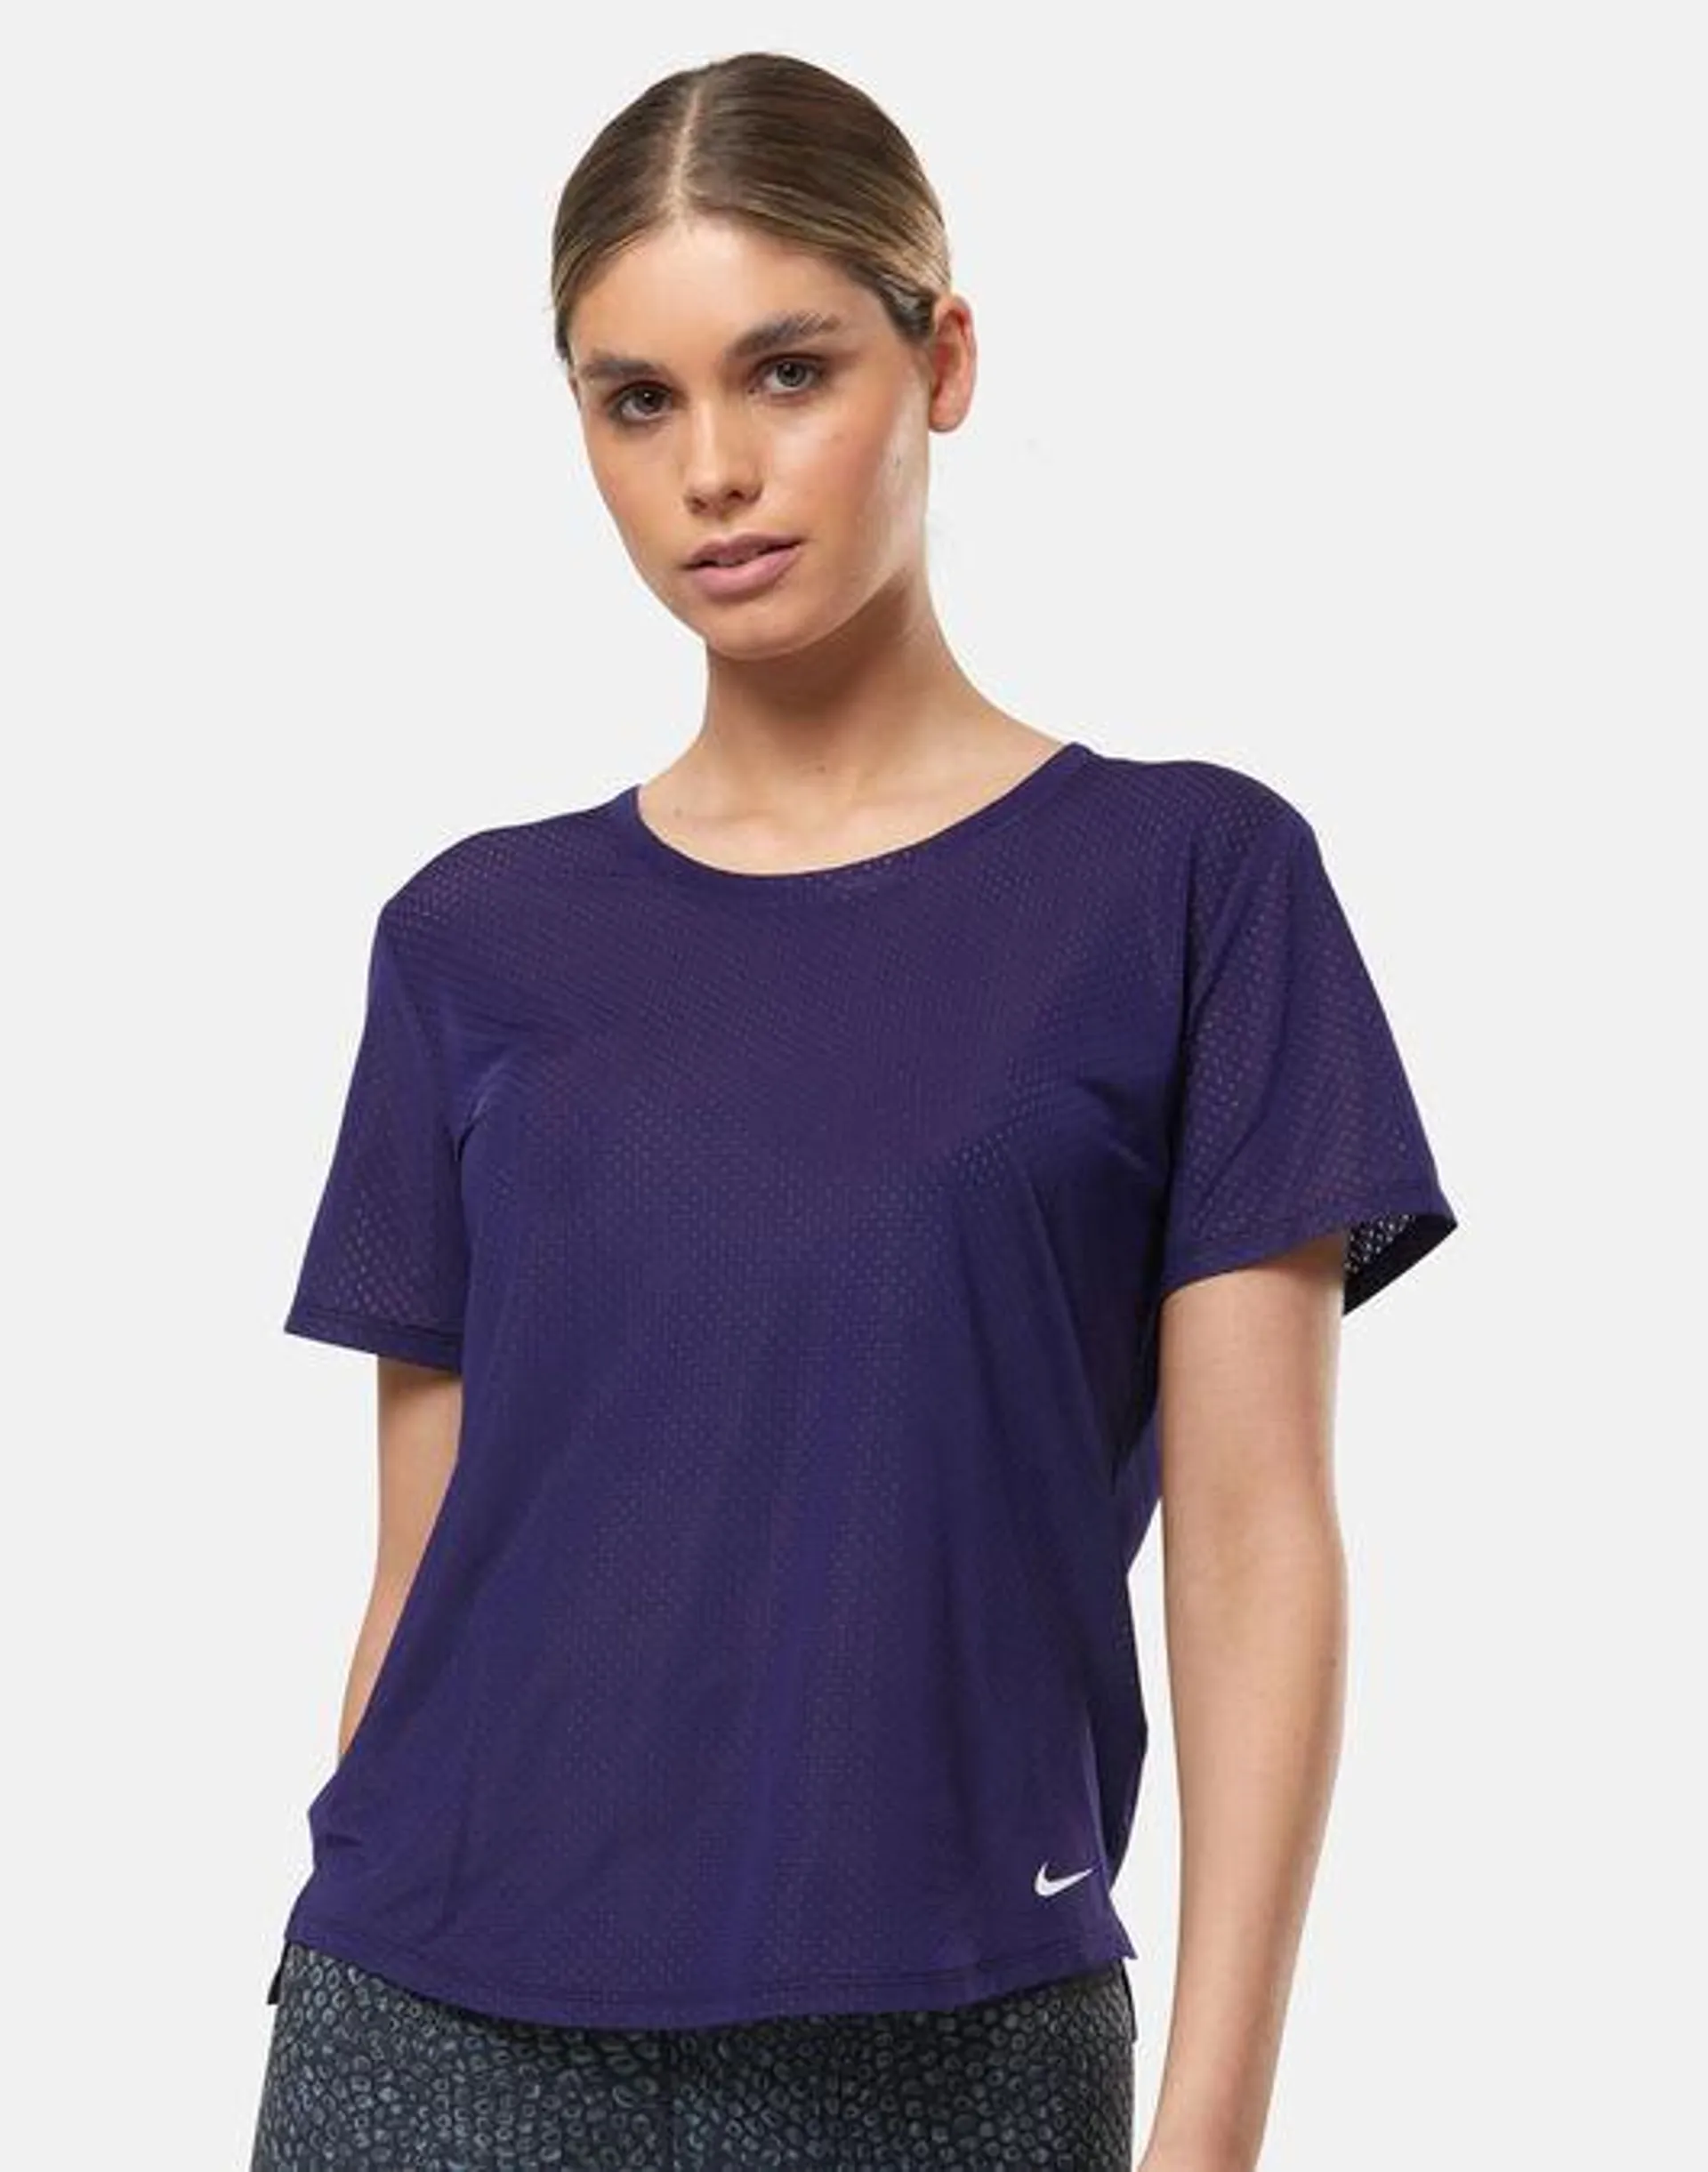 Nike Womens One Breathe T-Shirt